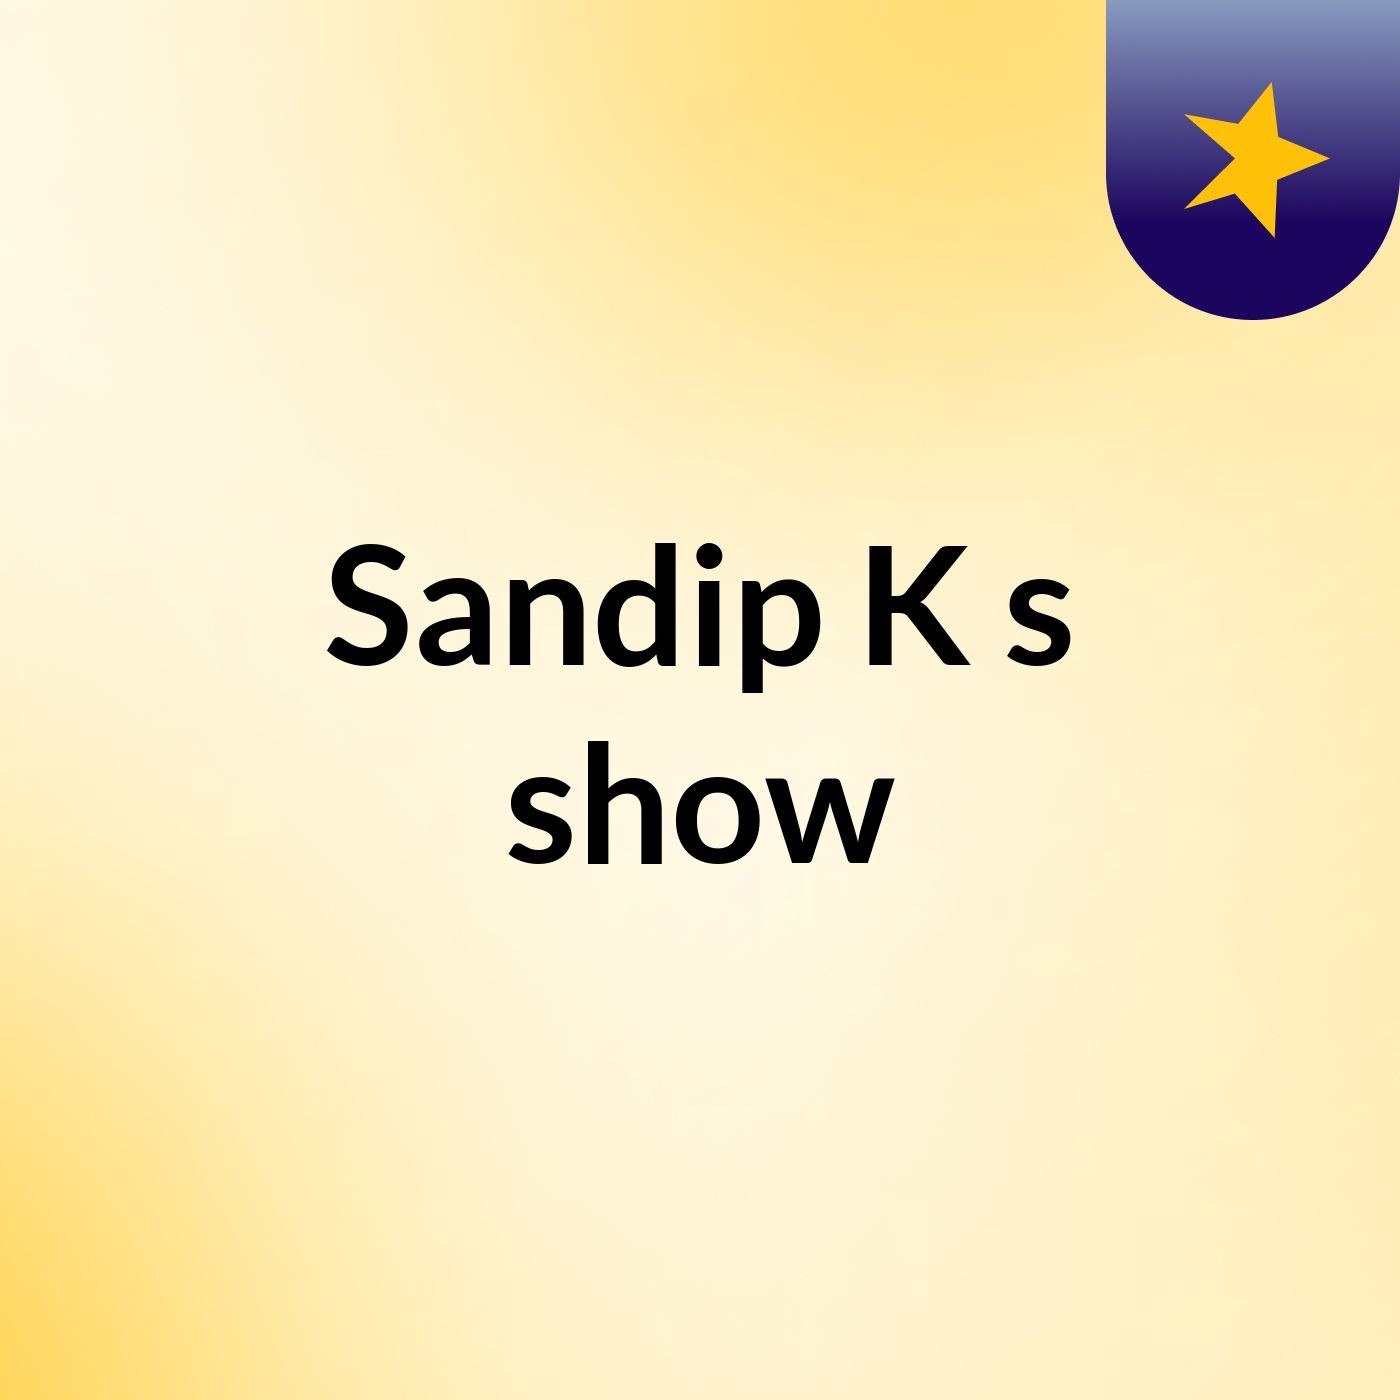 Sandip K's show